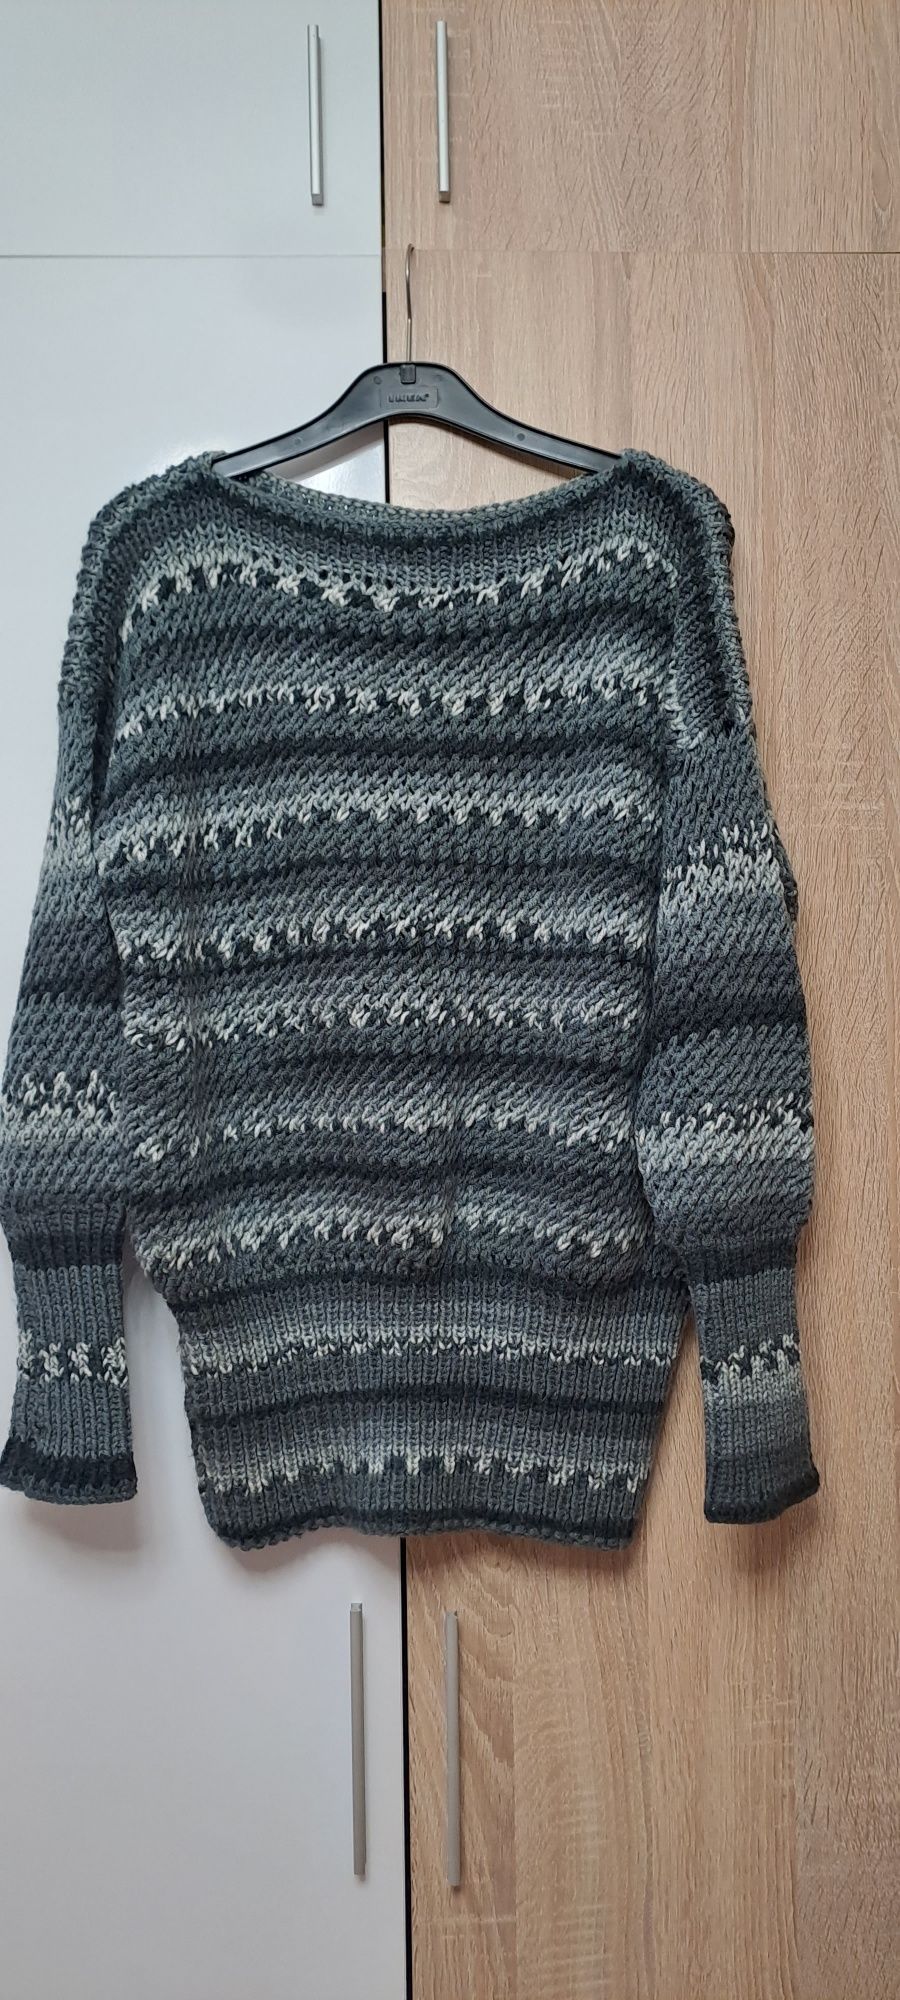 Ръчно плетен пуловер